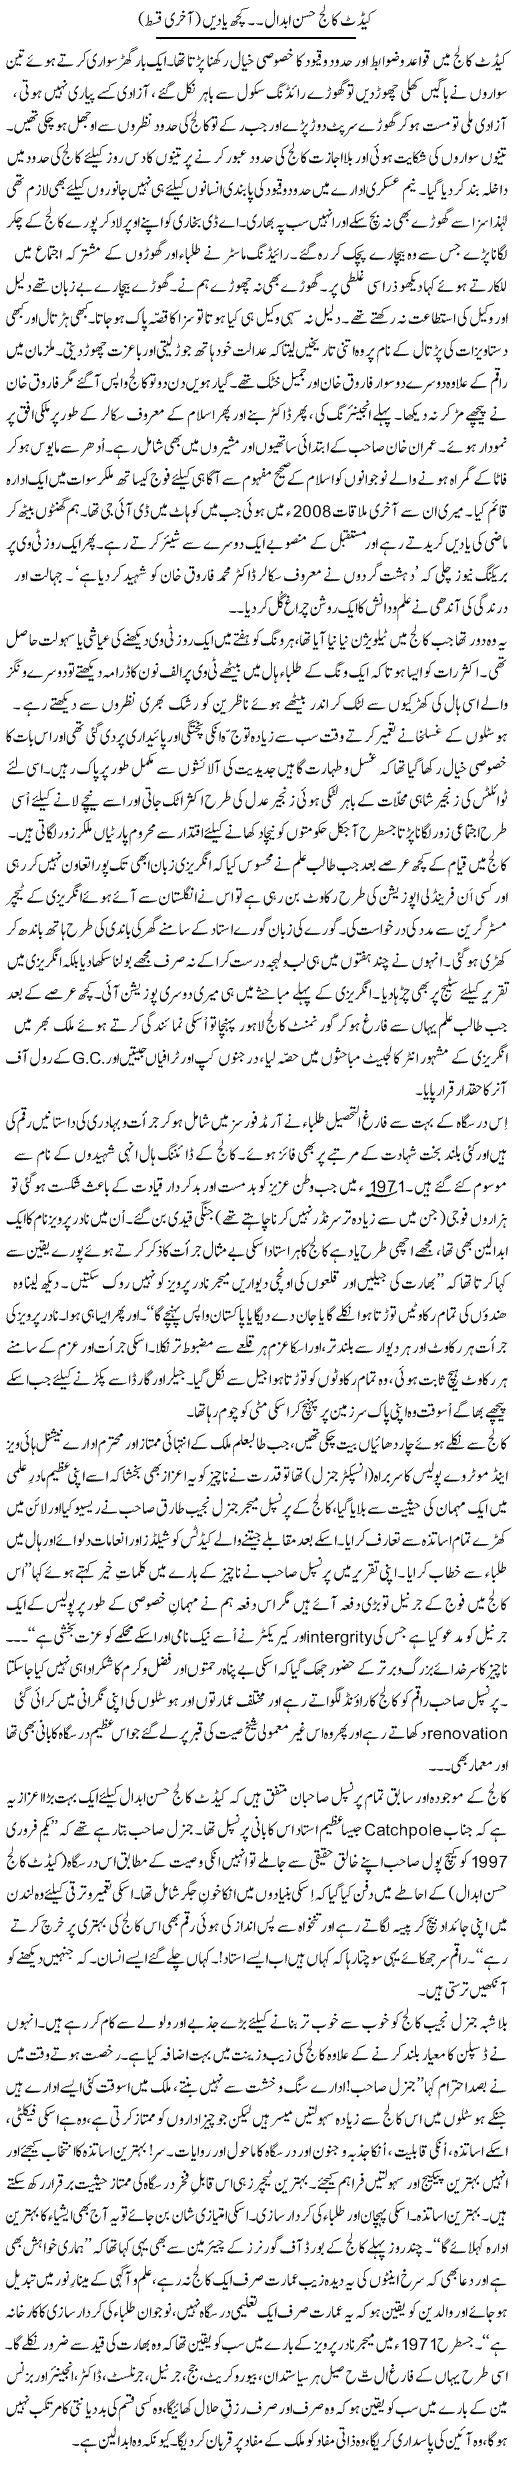 Cadet College Hasan Abdal. Kuch Yaden (2) | Zulfiqar Ahmed Cheema | Daily Urdu Columns